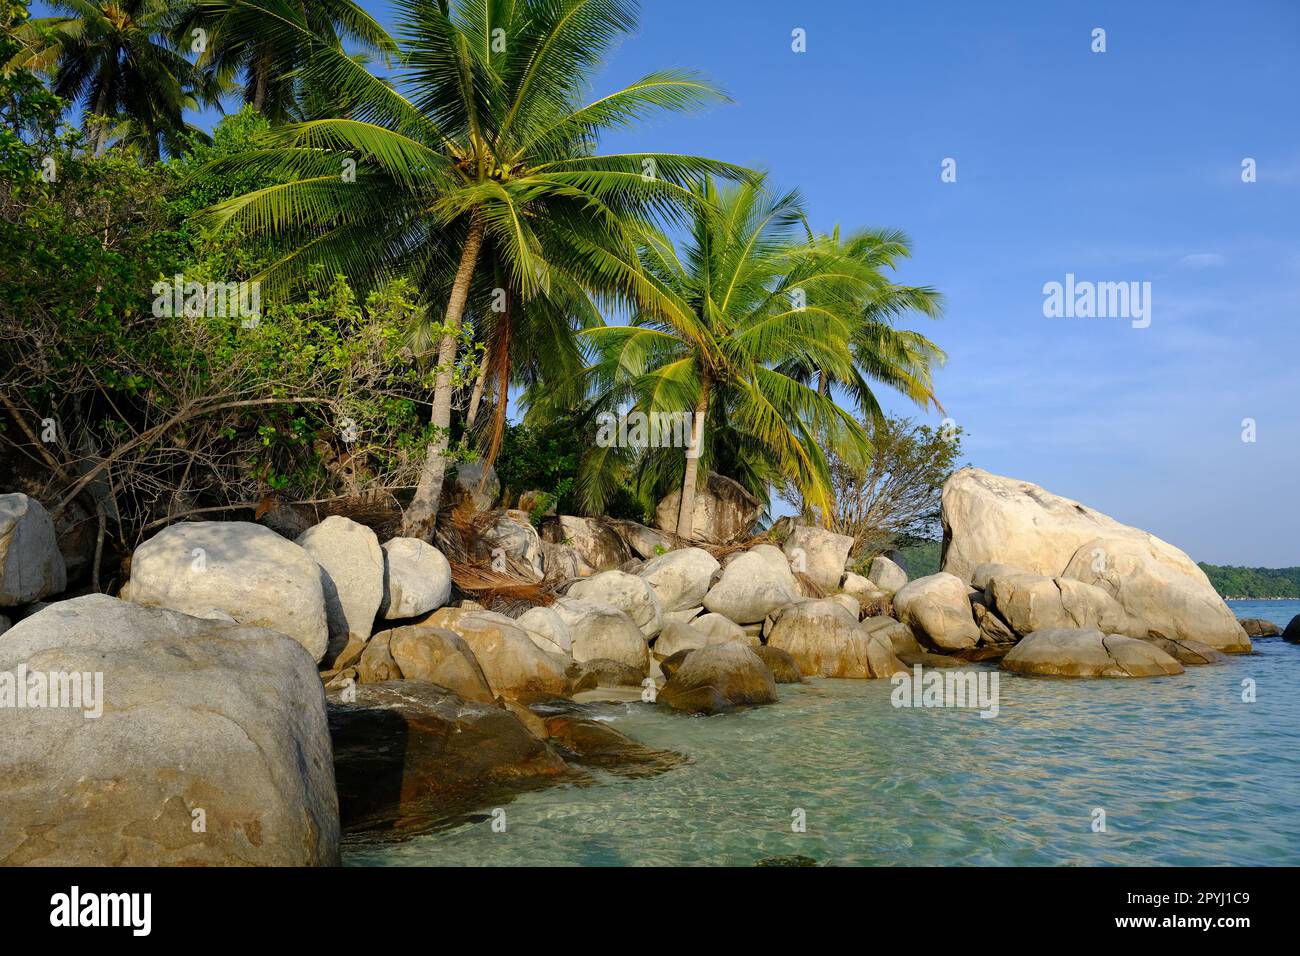 Indonesia Anambas Islands - Telaga Island coast with rocks and palm trees Stock Photo